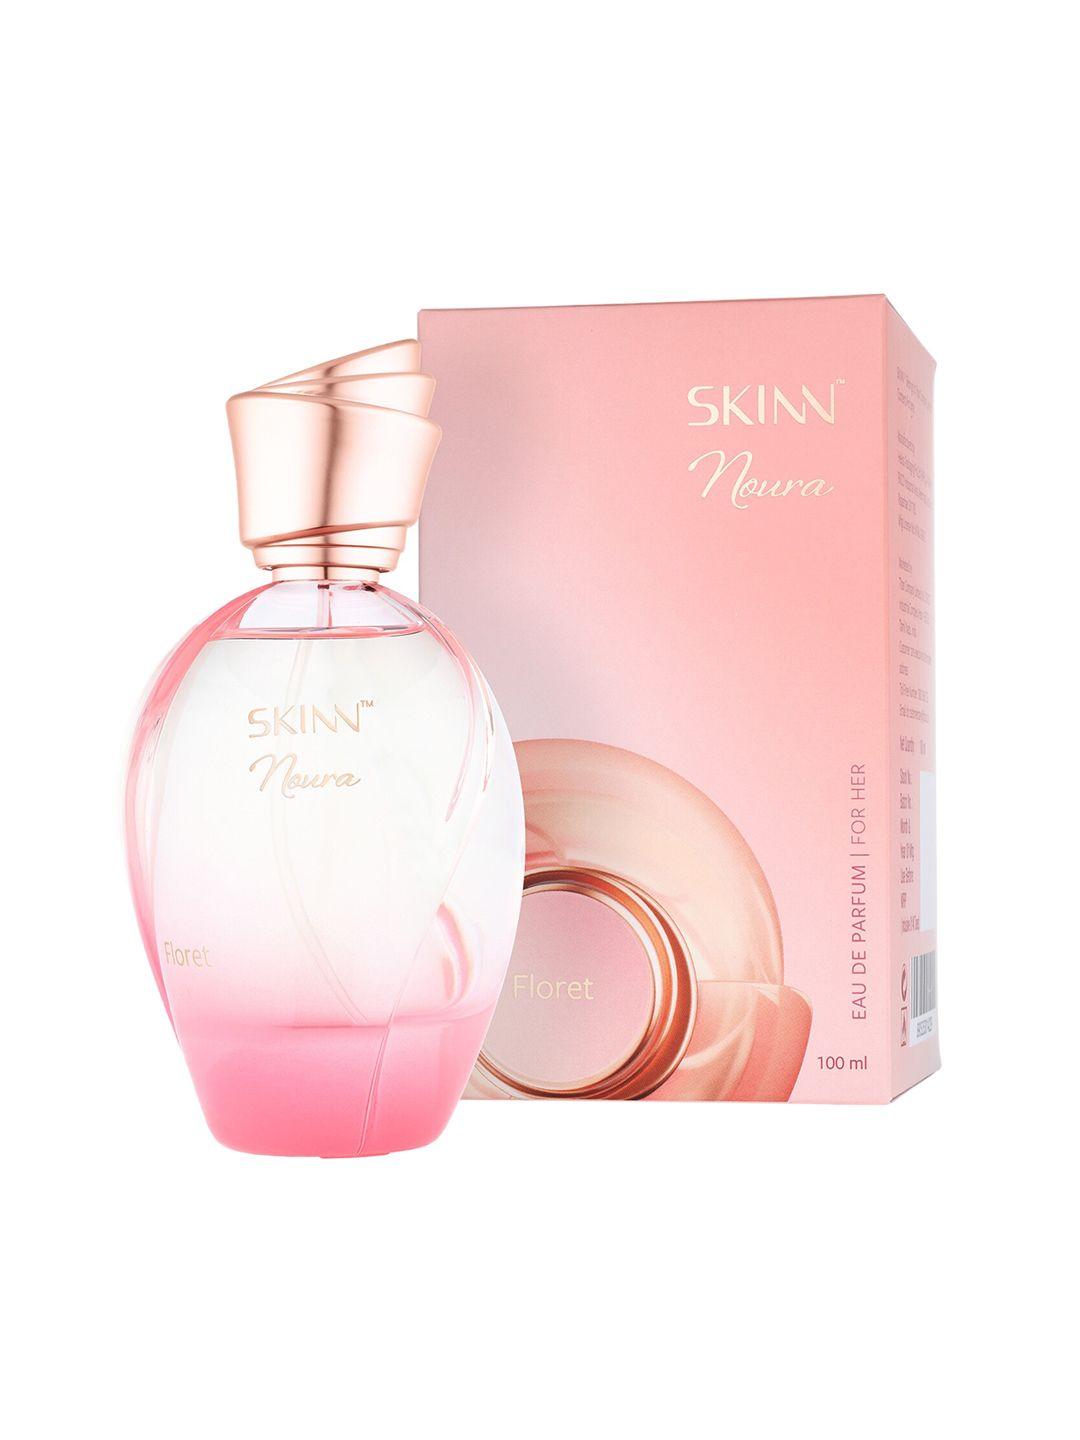 skinn-women-noura-floret-eau-de-parfum-100-ml